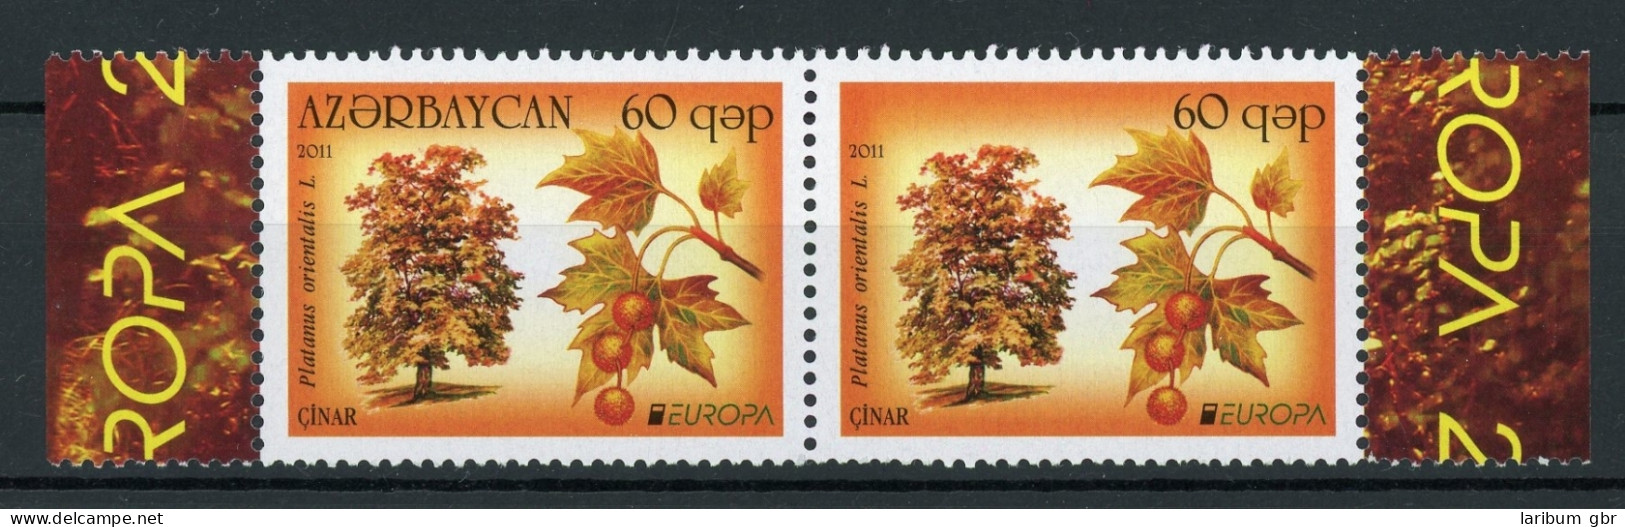 Aserbaidschan 841 I Postfrisch Fehlender Landesname, CEPT #HE030 - Azerbaïdjan